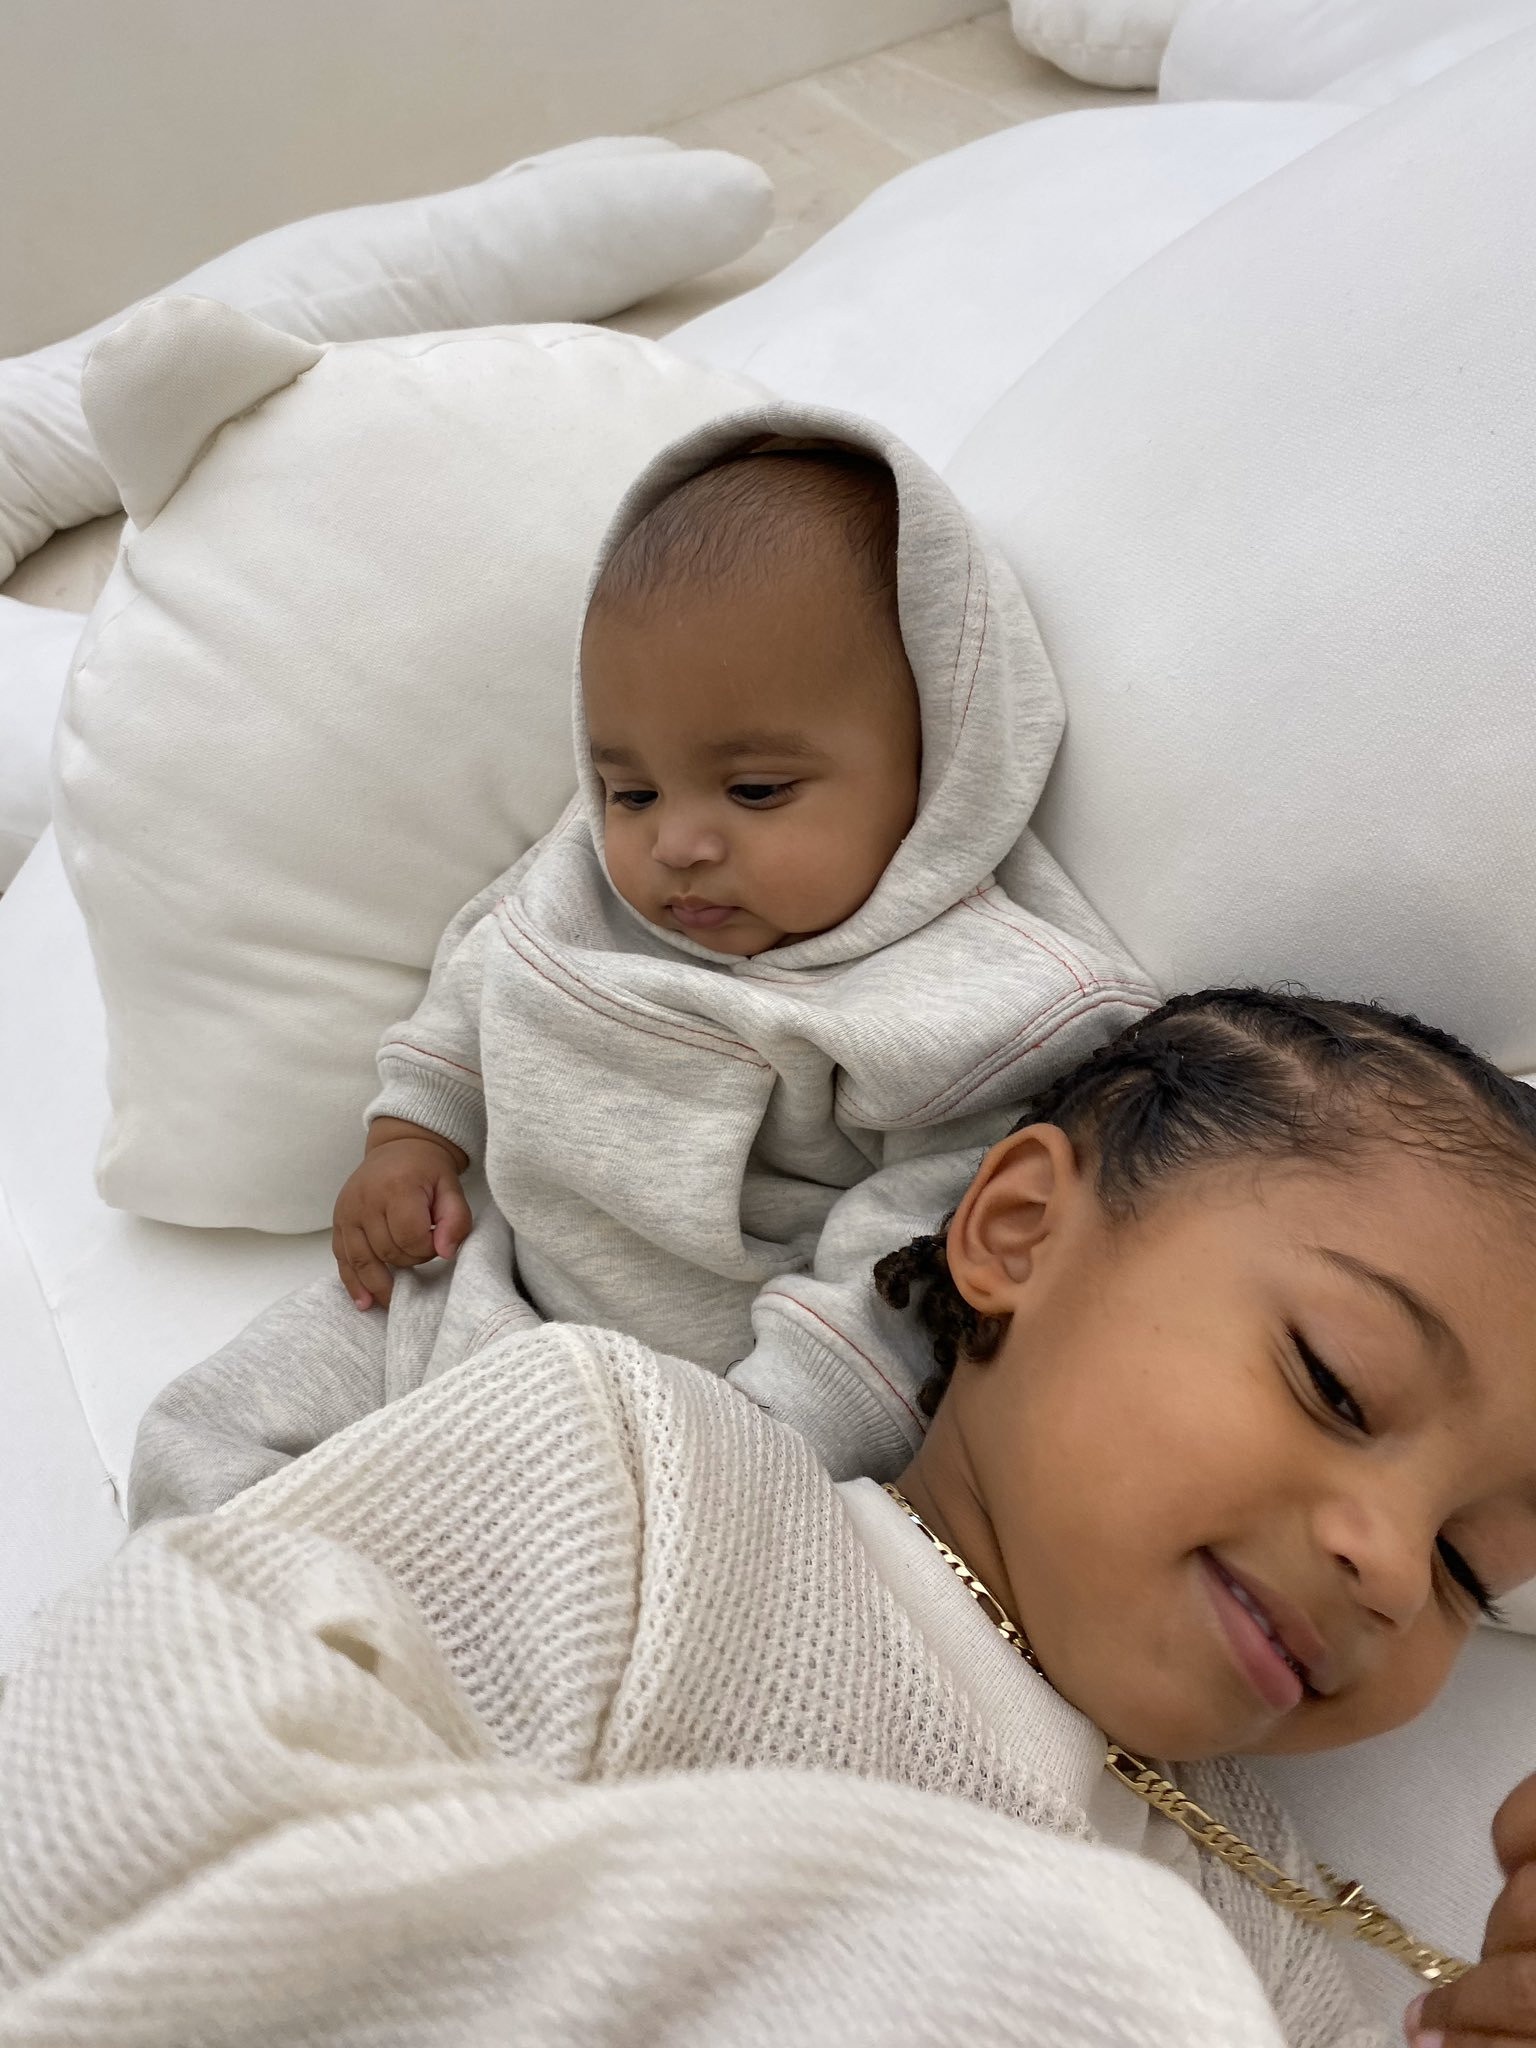 Kim Kardashian Shares Adorable New Photos Of Her Sons Saint And Psalm